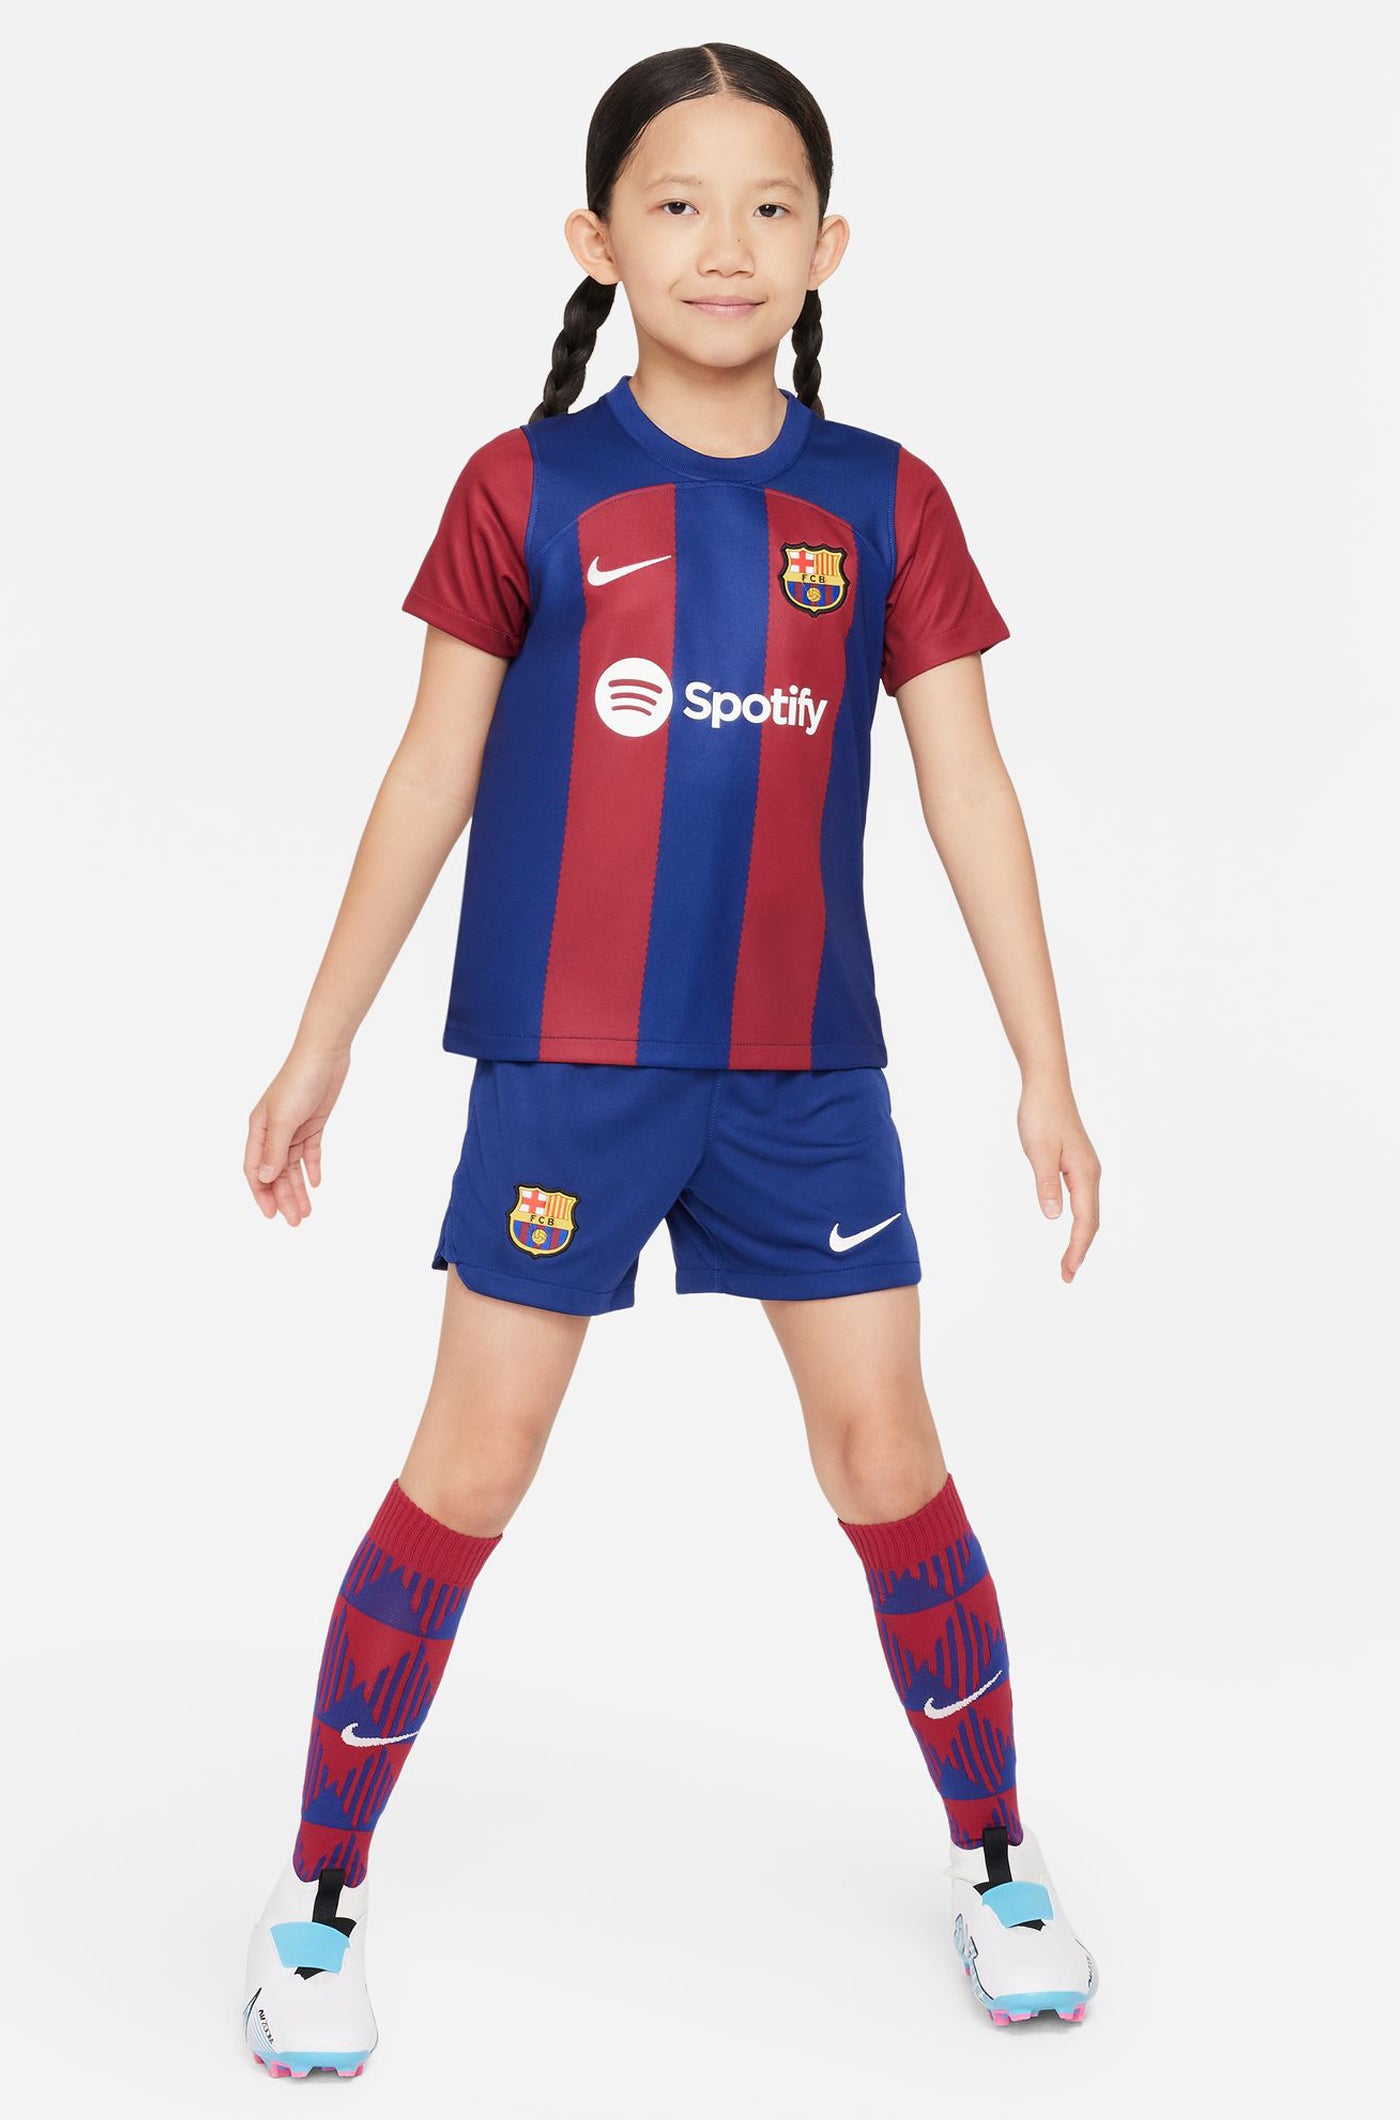 Conjunto primera equipación Barcelona 23/24 - Niño/a pequeño/a Barça Official Store Spotify Camp